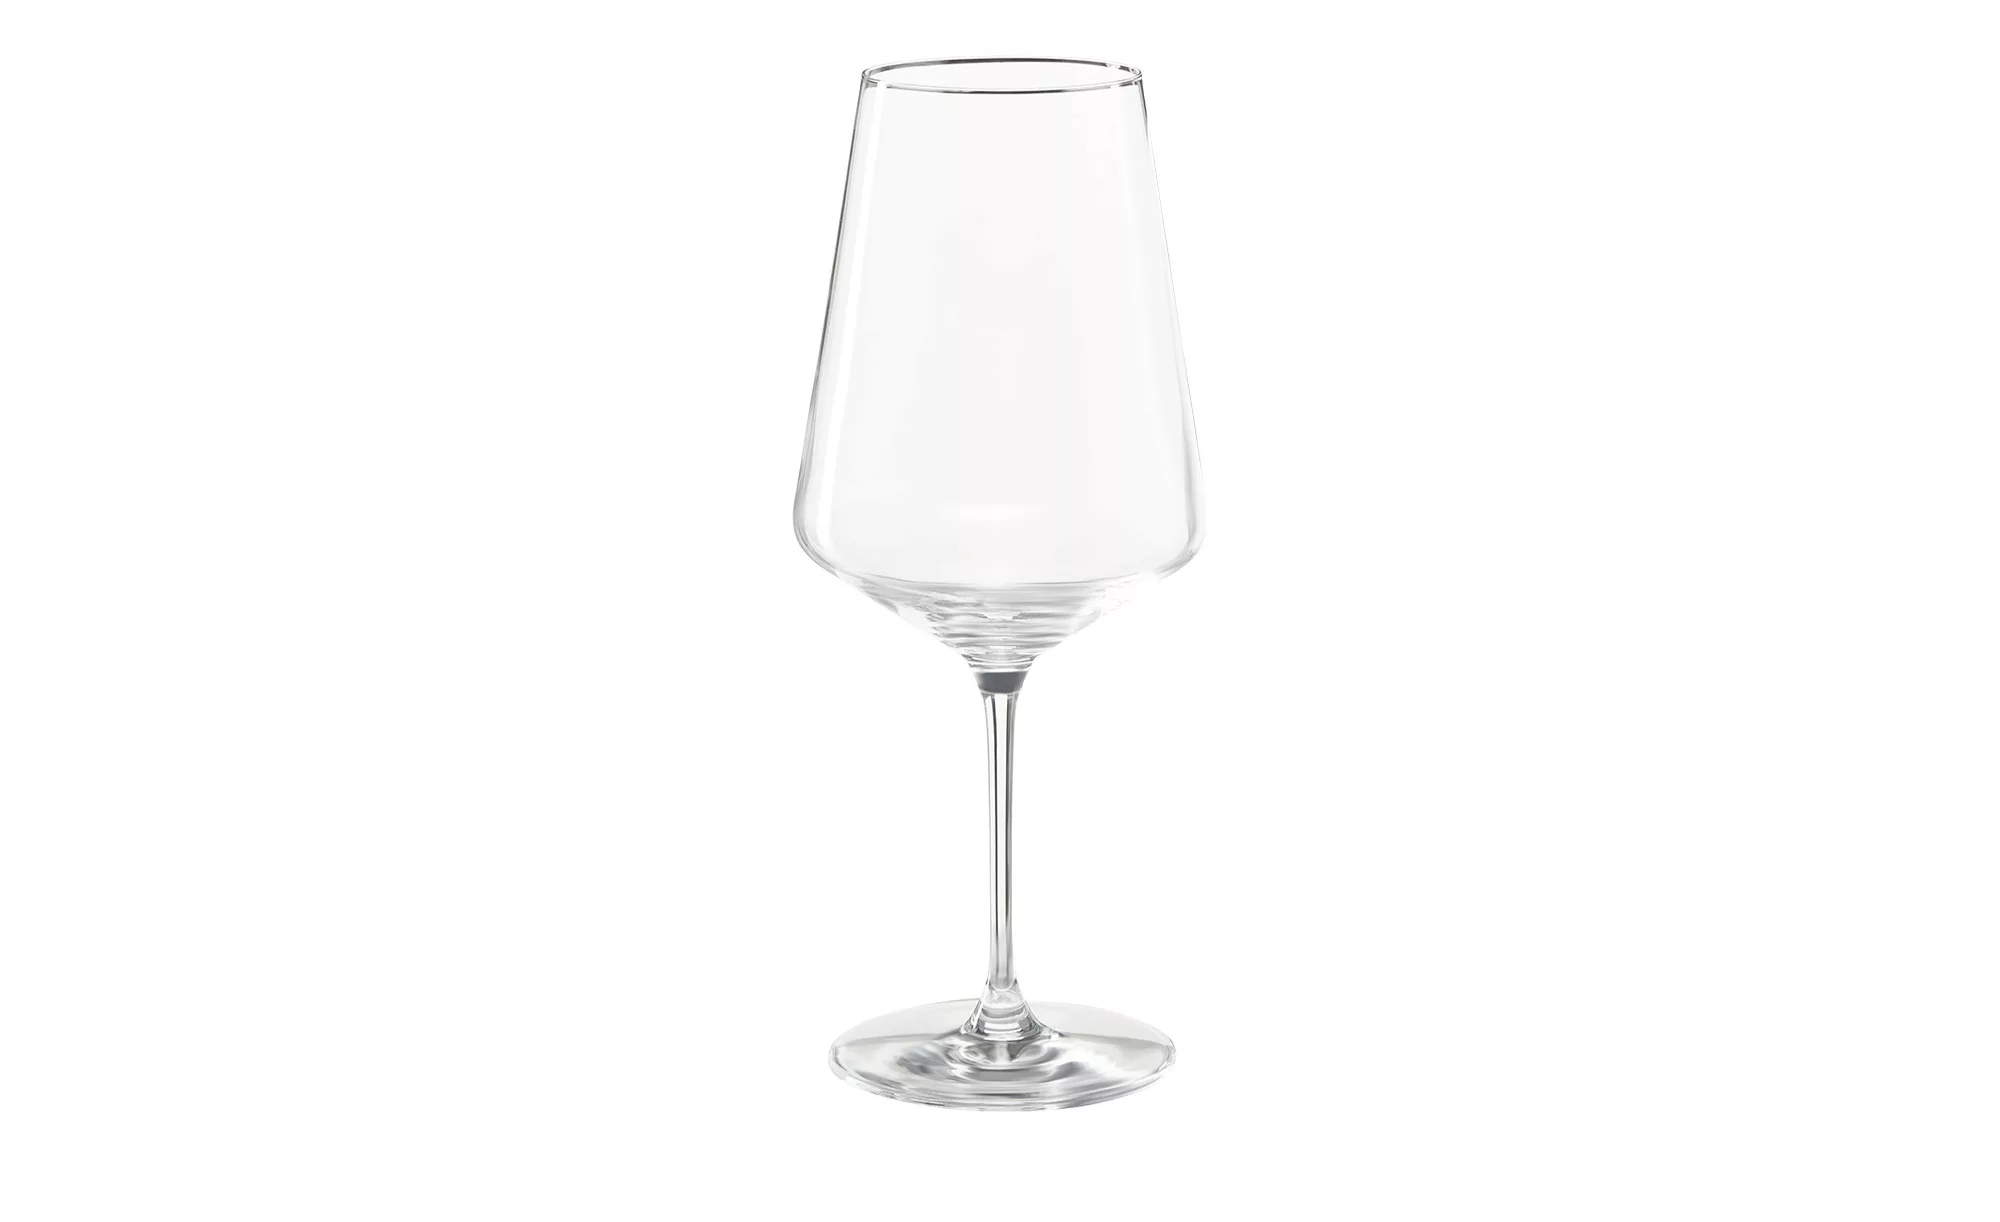 LEONARDO Gläserset  Selezione ¦ transparent/klar ¦ Glas Gläser & Karaffen - günstig online kaufen